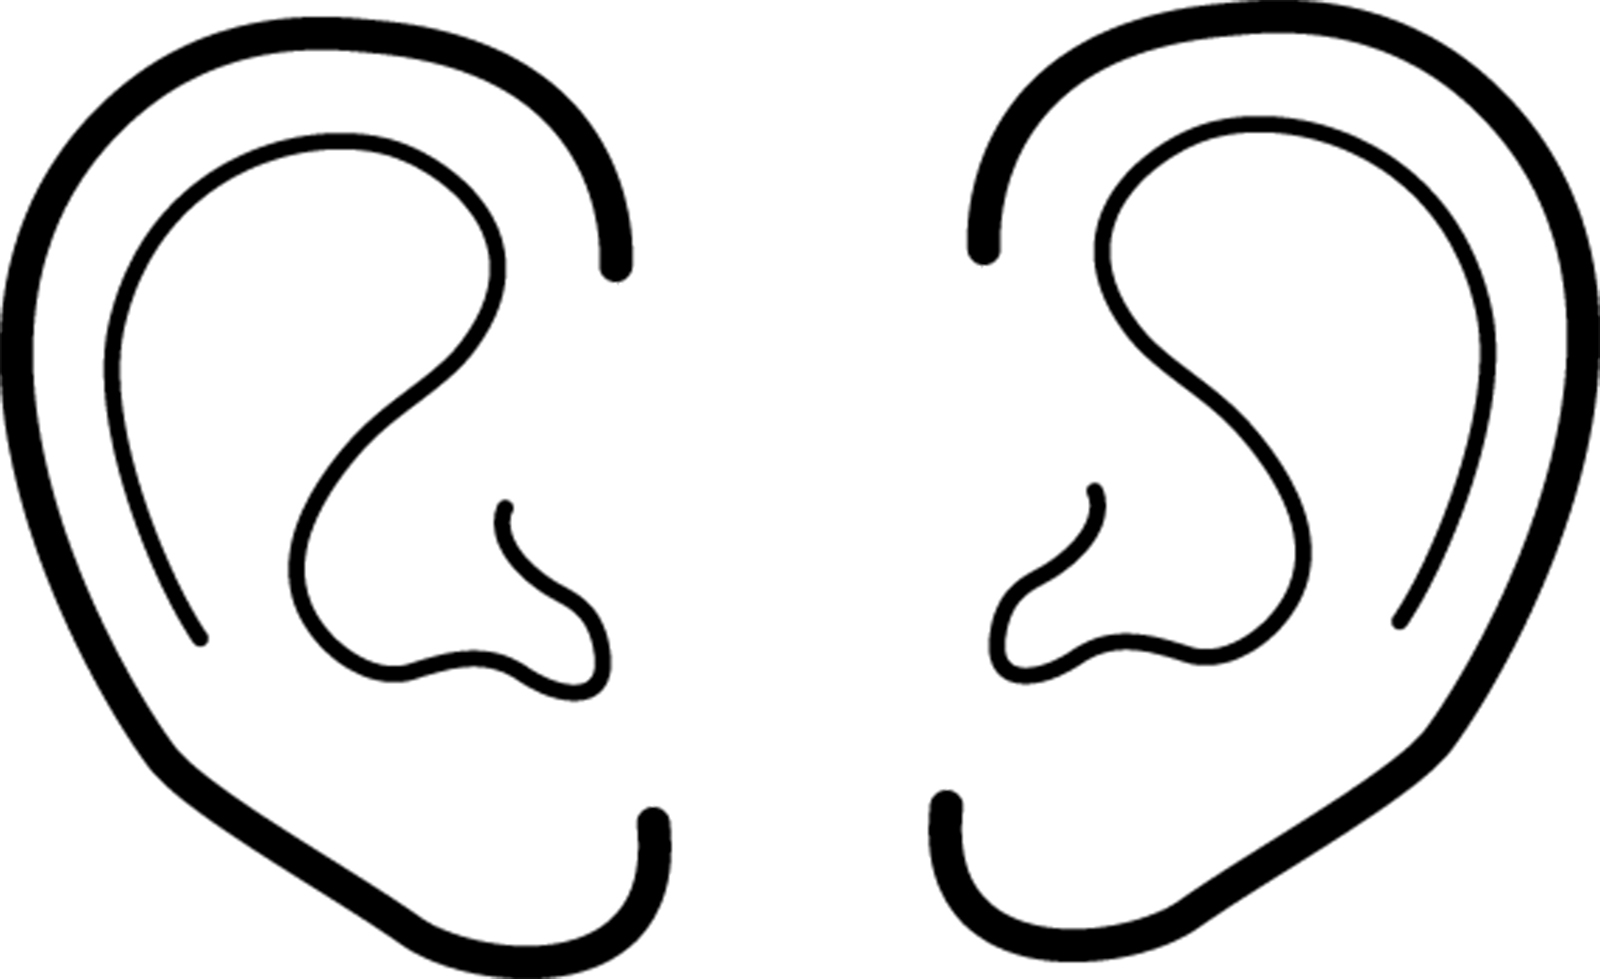 Ear clipart earclipart images listening clip art photo